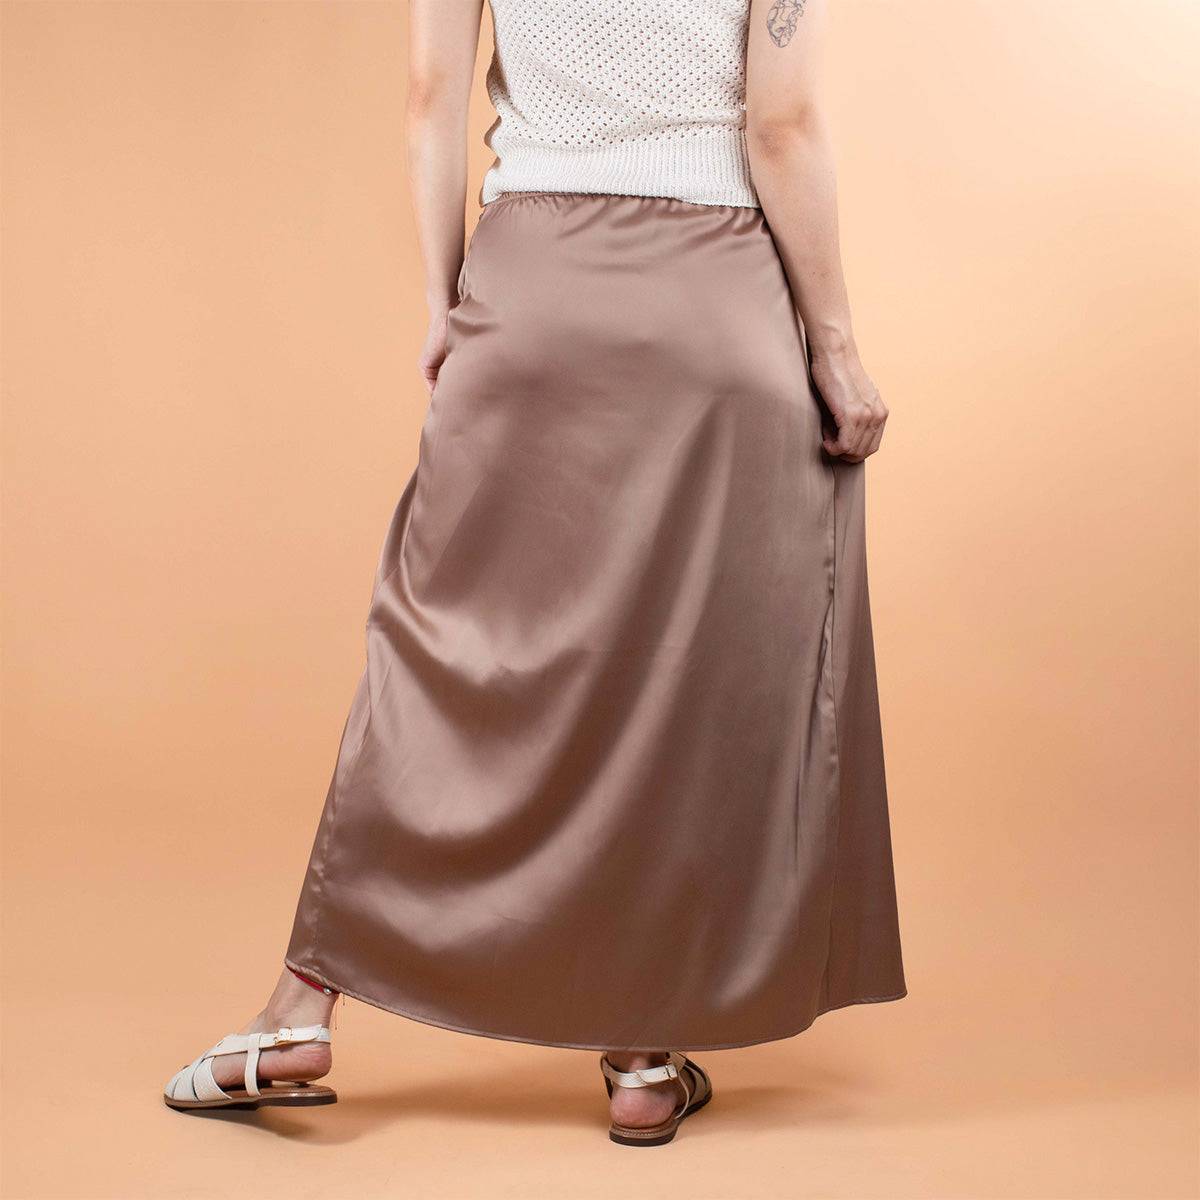 Falda larga color beige con argolla lateral